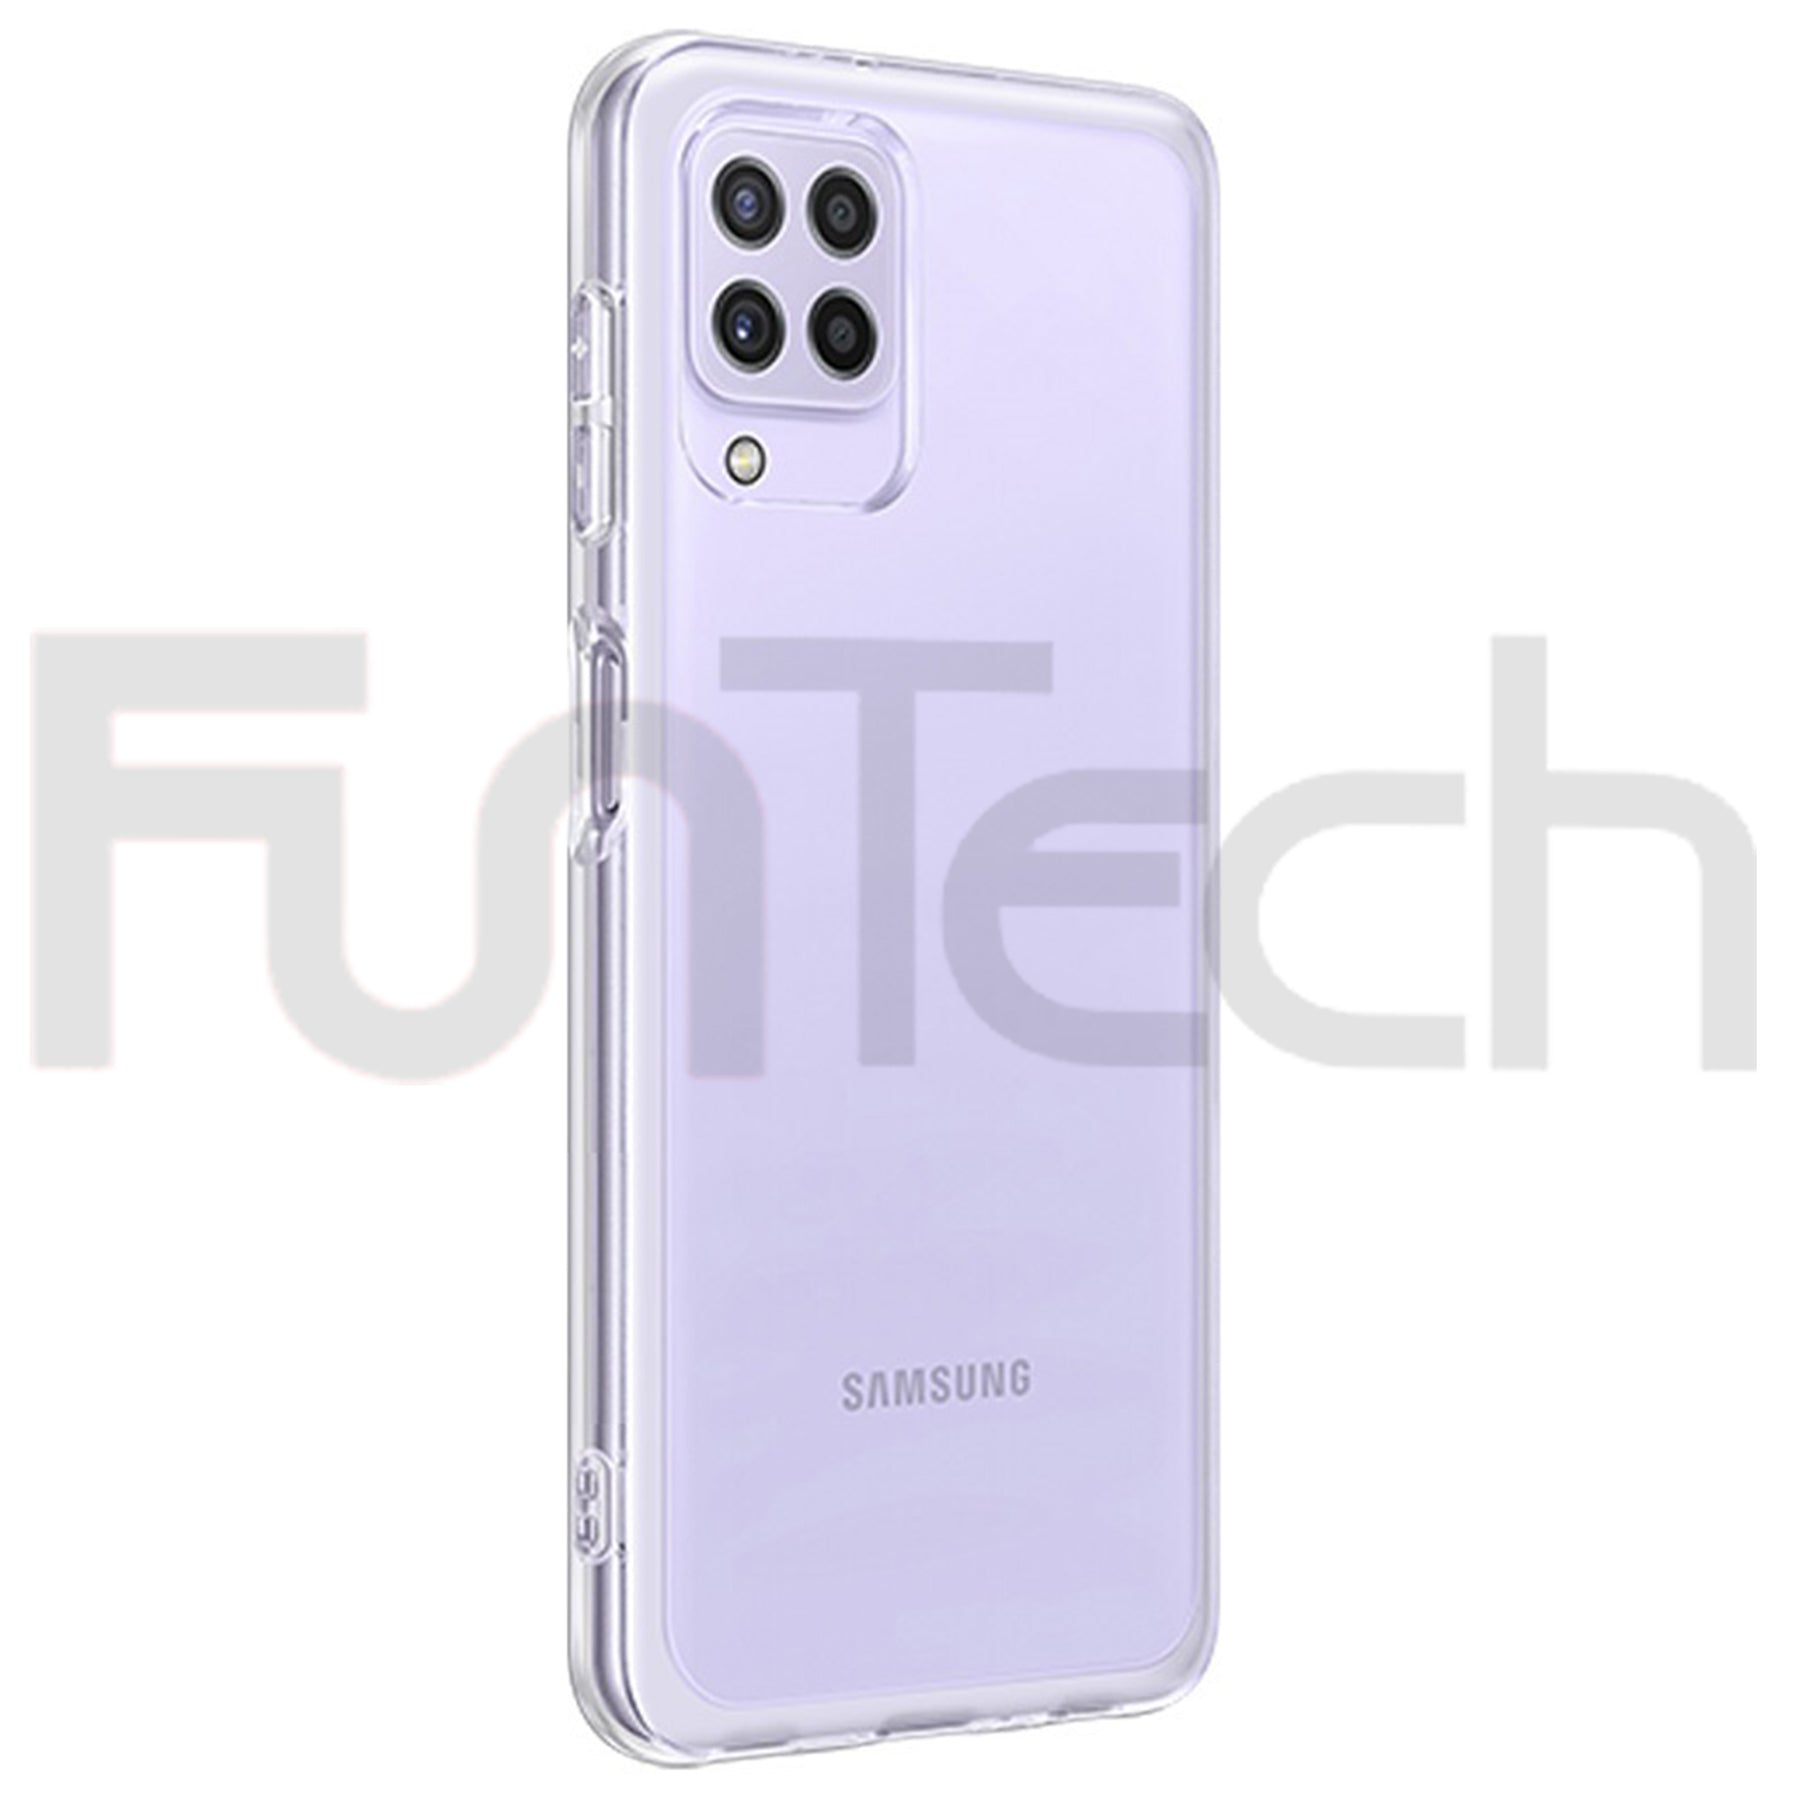 Samsung A22 5G, Protection Case.